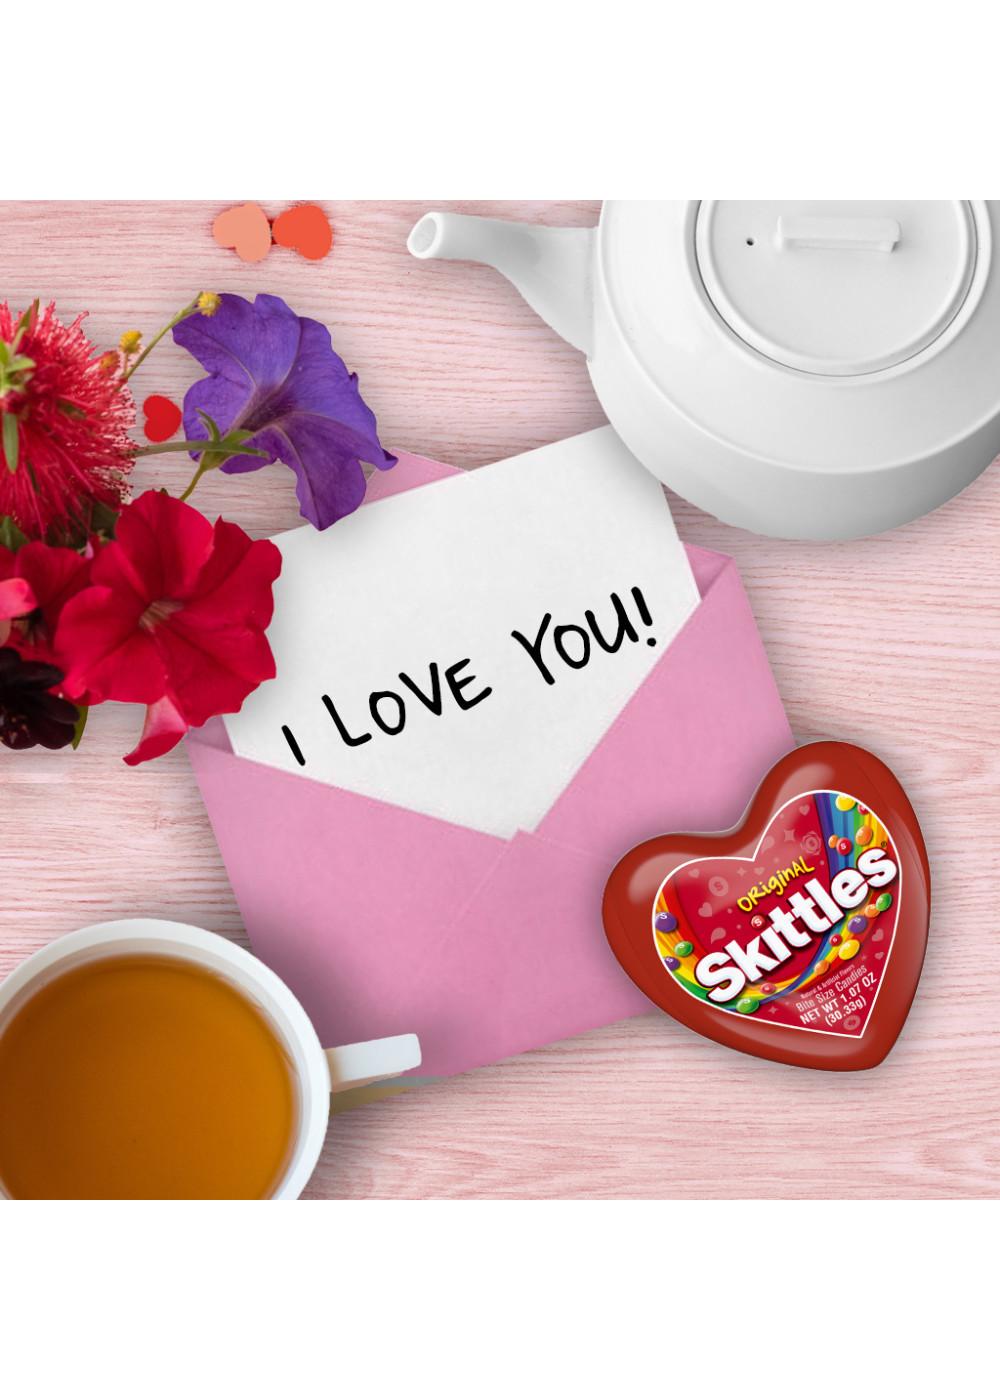 Skittles Original Candy Valentine's Heart Gift Box; image 5 of 7